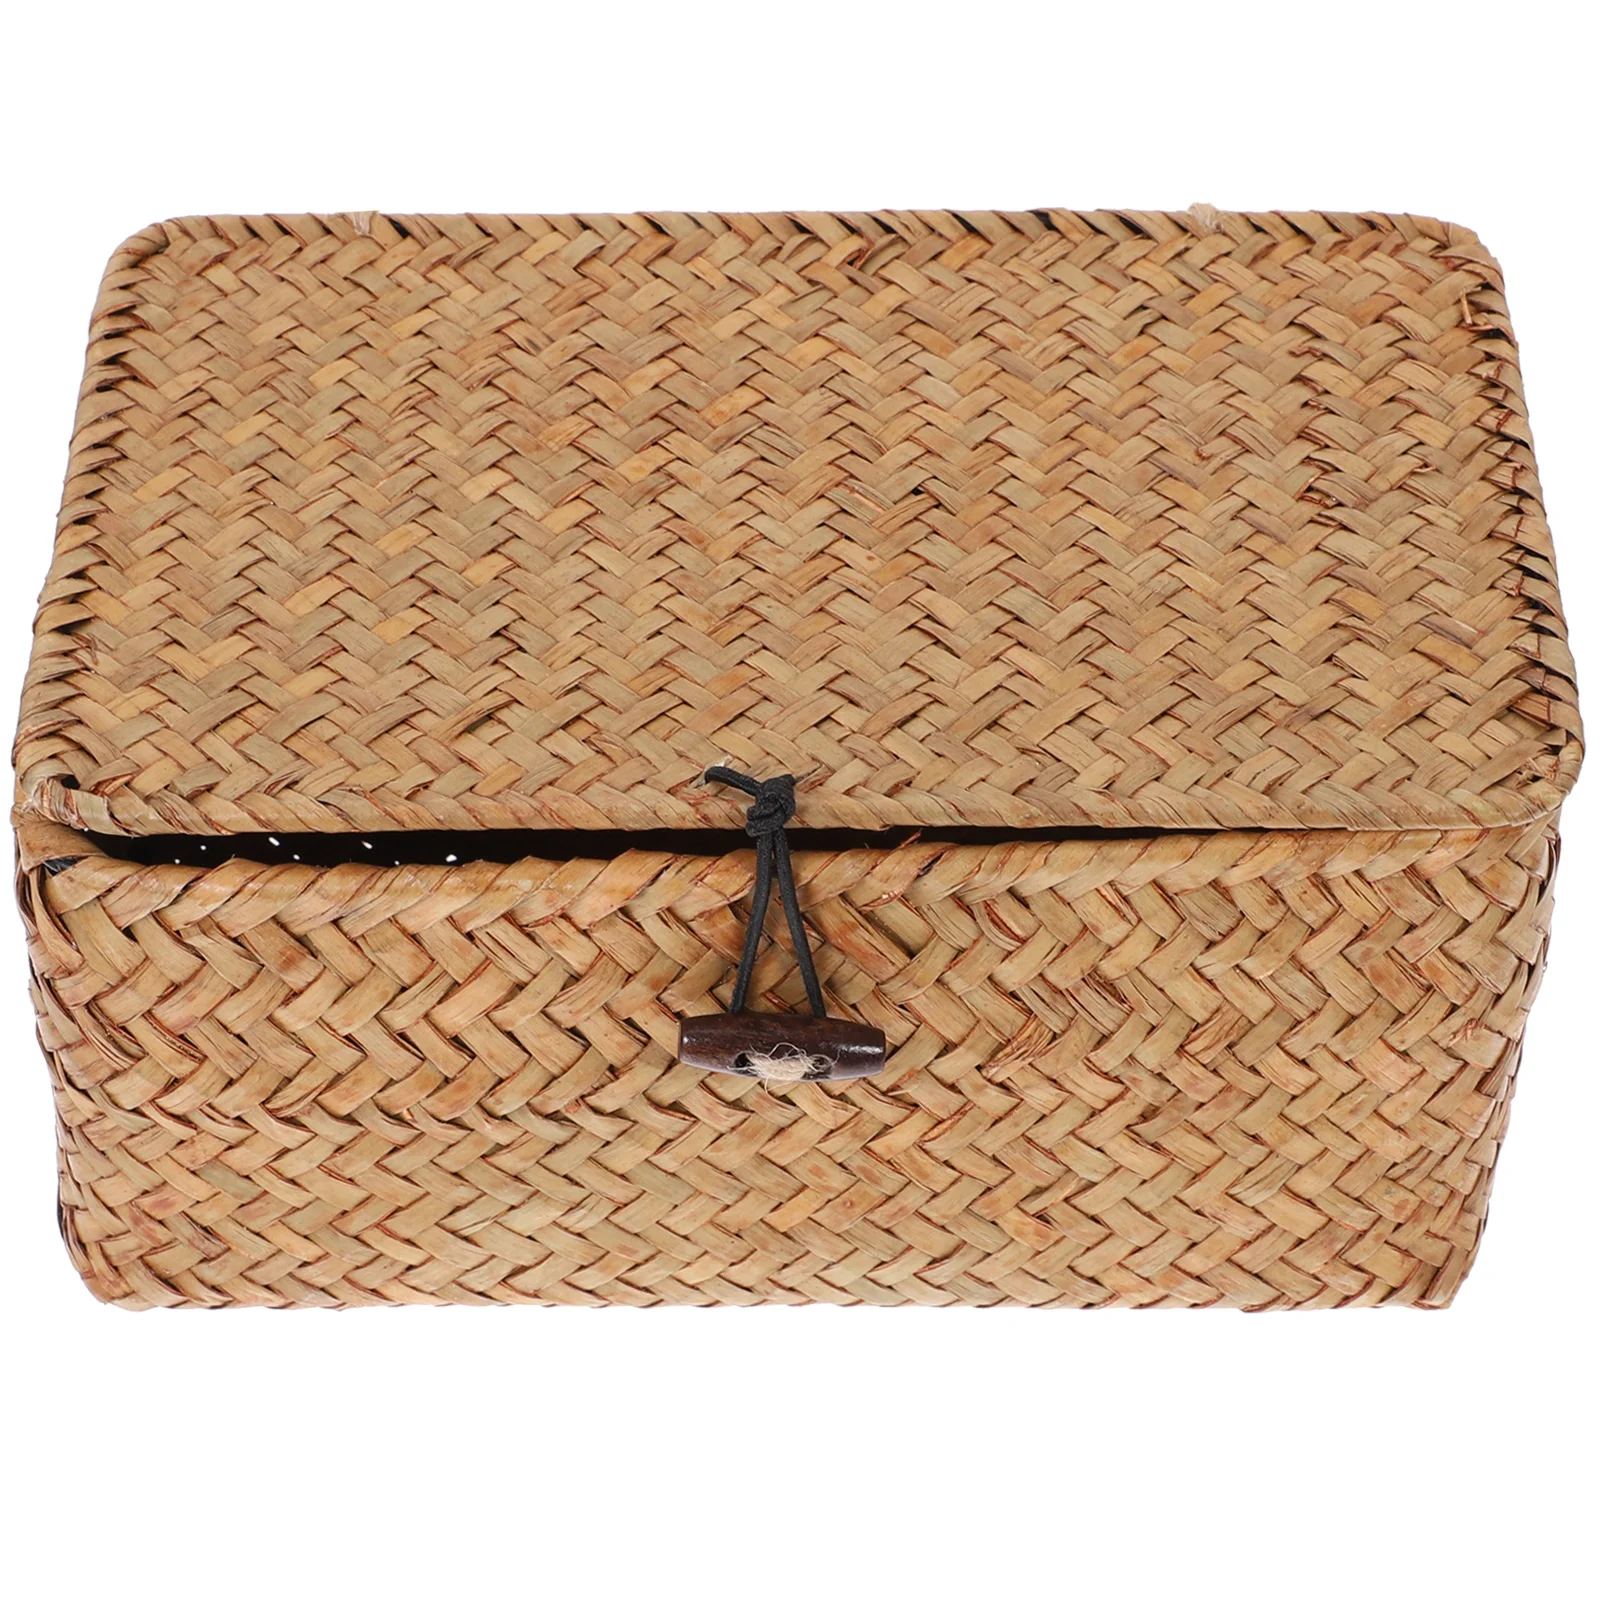 

Woven Storage Box Desktop Organizer Housewarming Gift Multipurpose Container Basket Lid Seaweed Seagrass Case Baskets Makeup